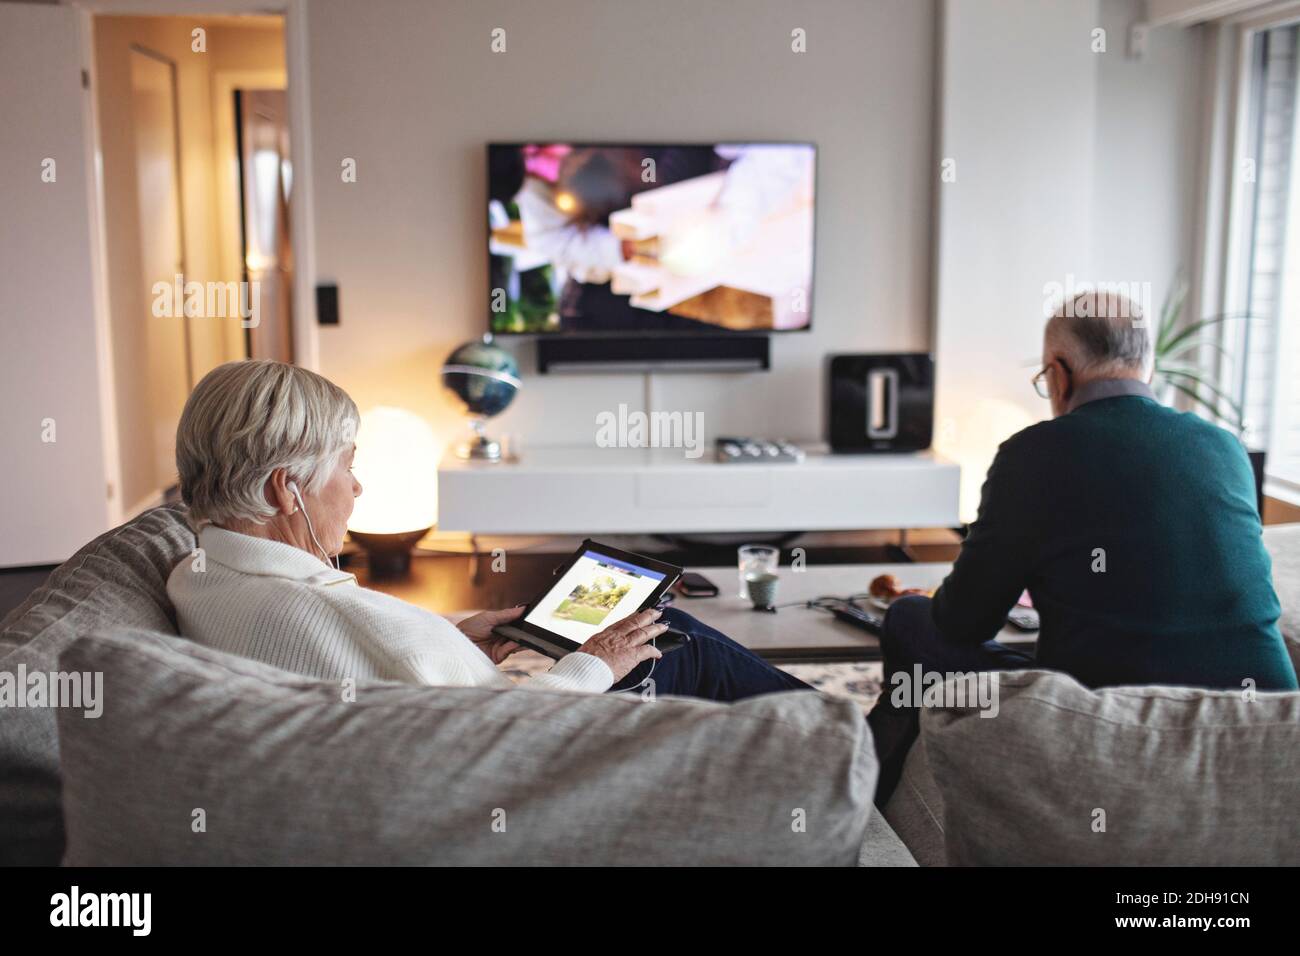 Senior woman using digital tablet while partner sitting on sofa in living room Stock Photo